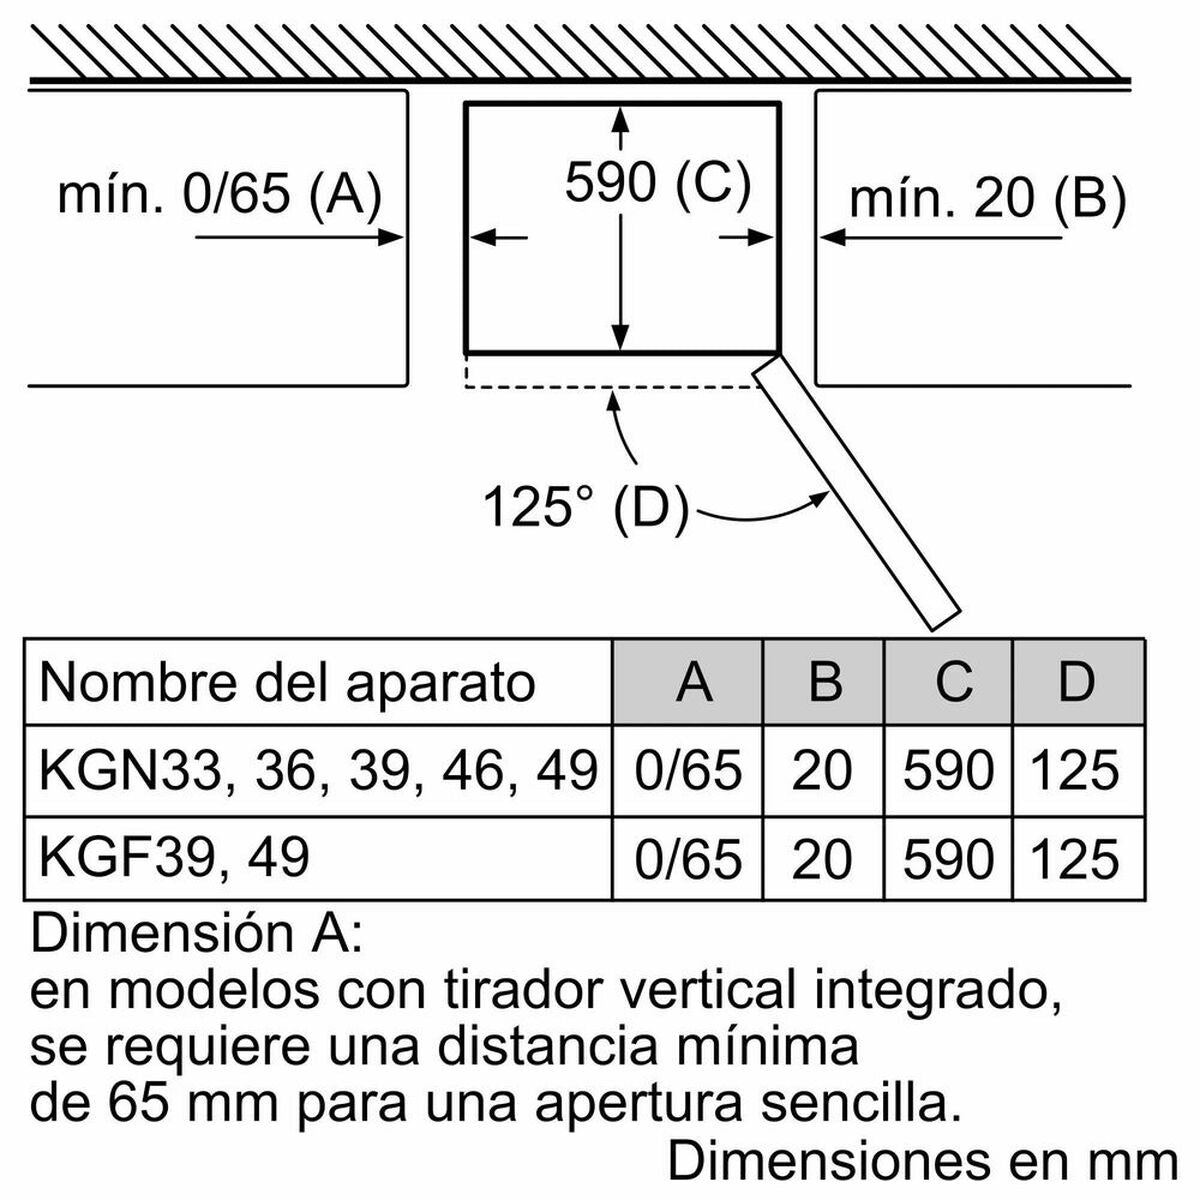 Koel-vriescombinatie BOSCH FRIGORIFICO BOSCH COMBI 186 x 60 A++ BLA Wit (186 x 60 cm)